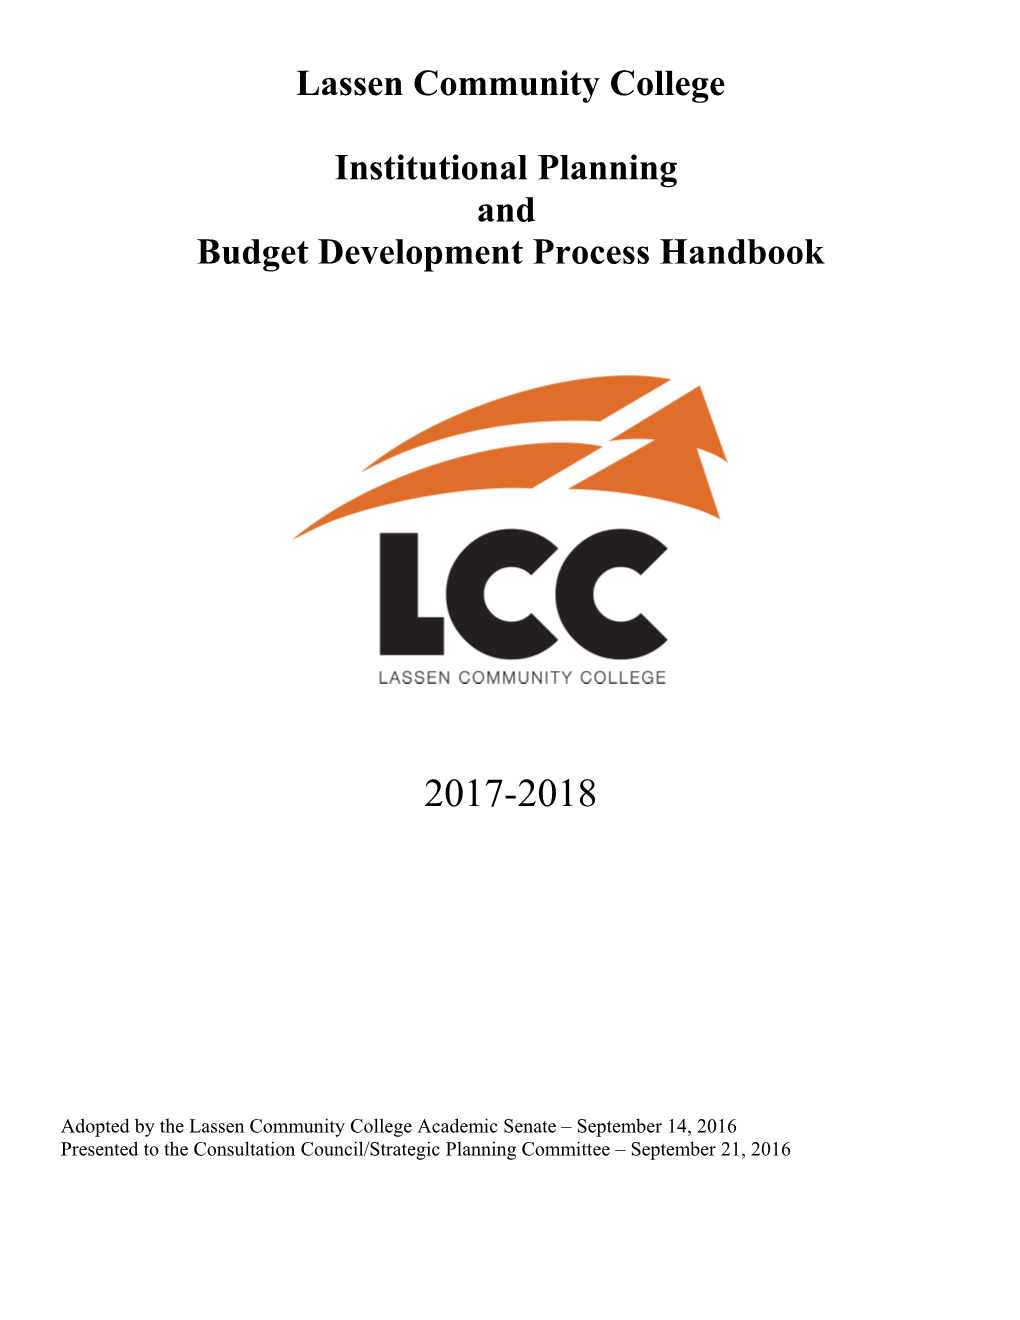 2017-2018 Planning & Budget Development Handbook